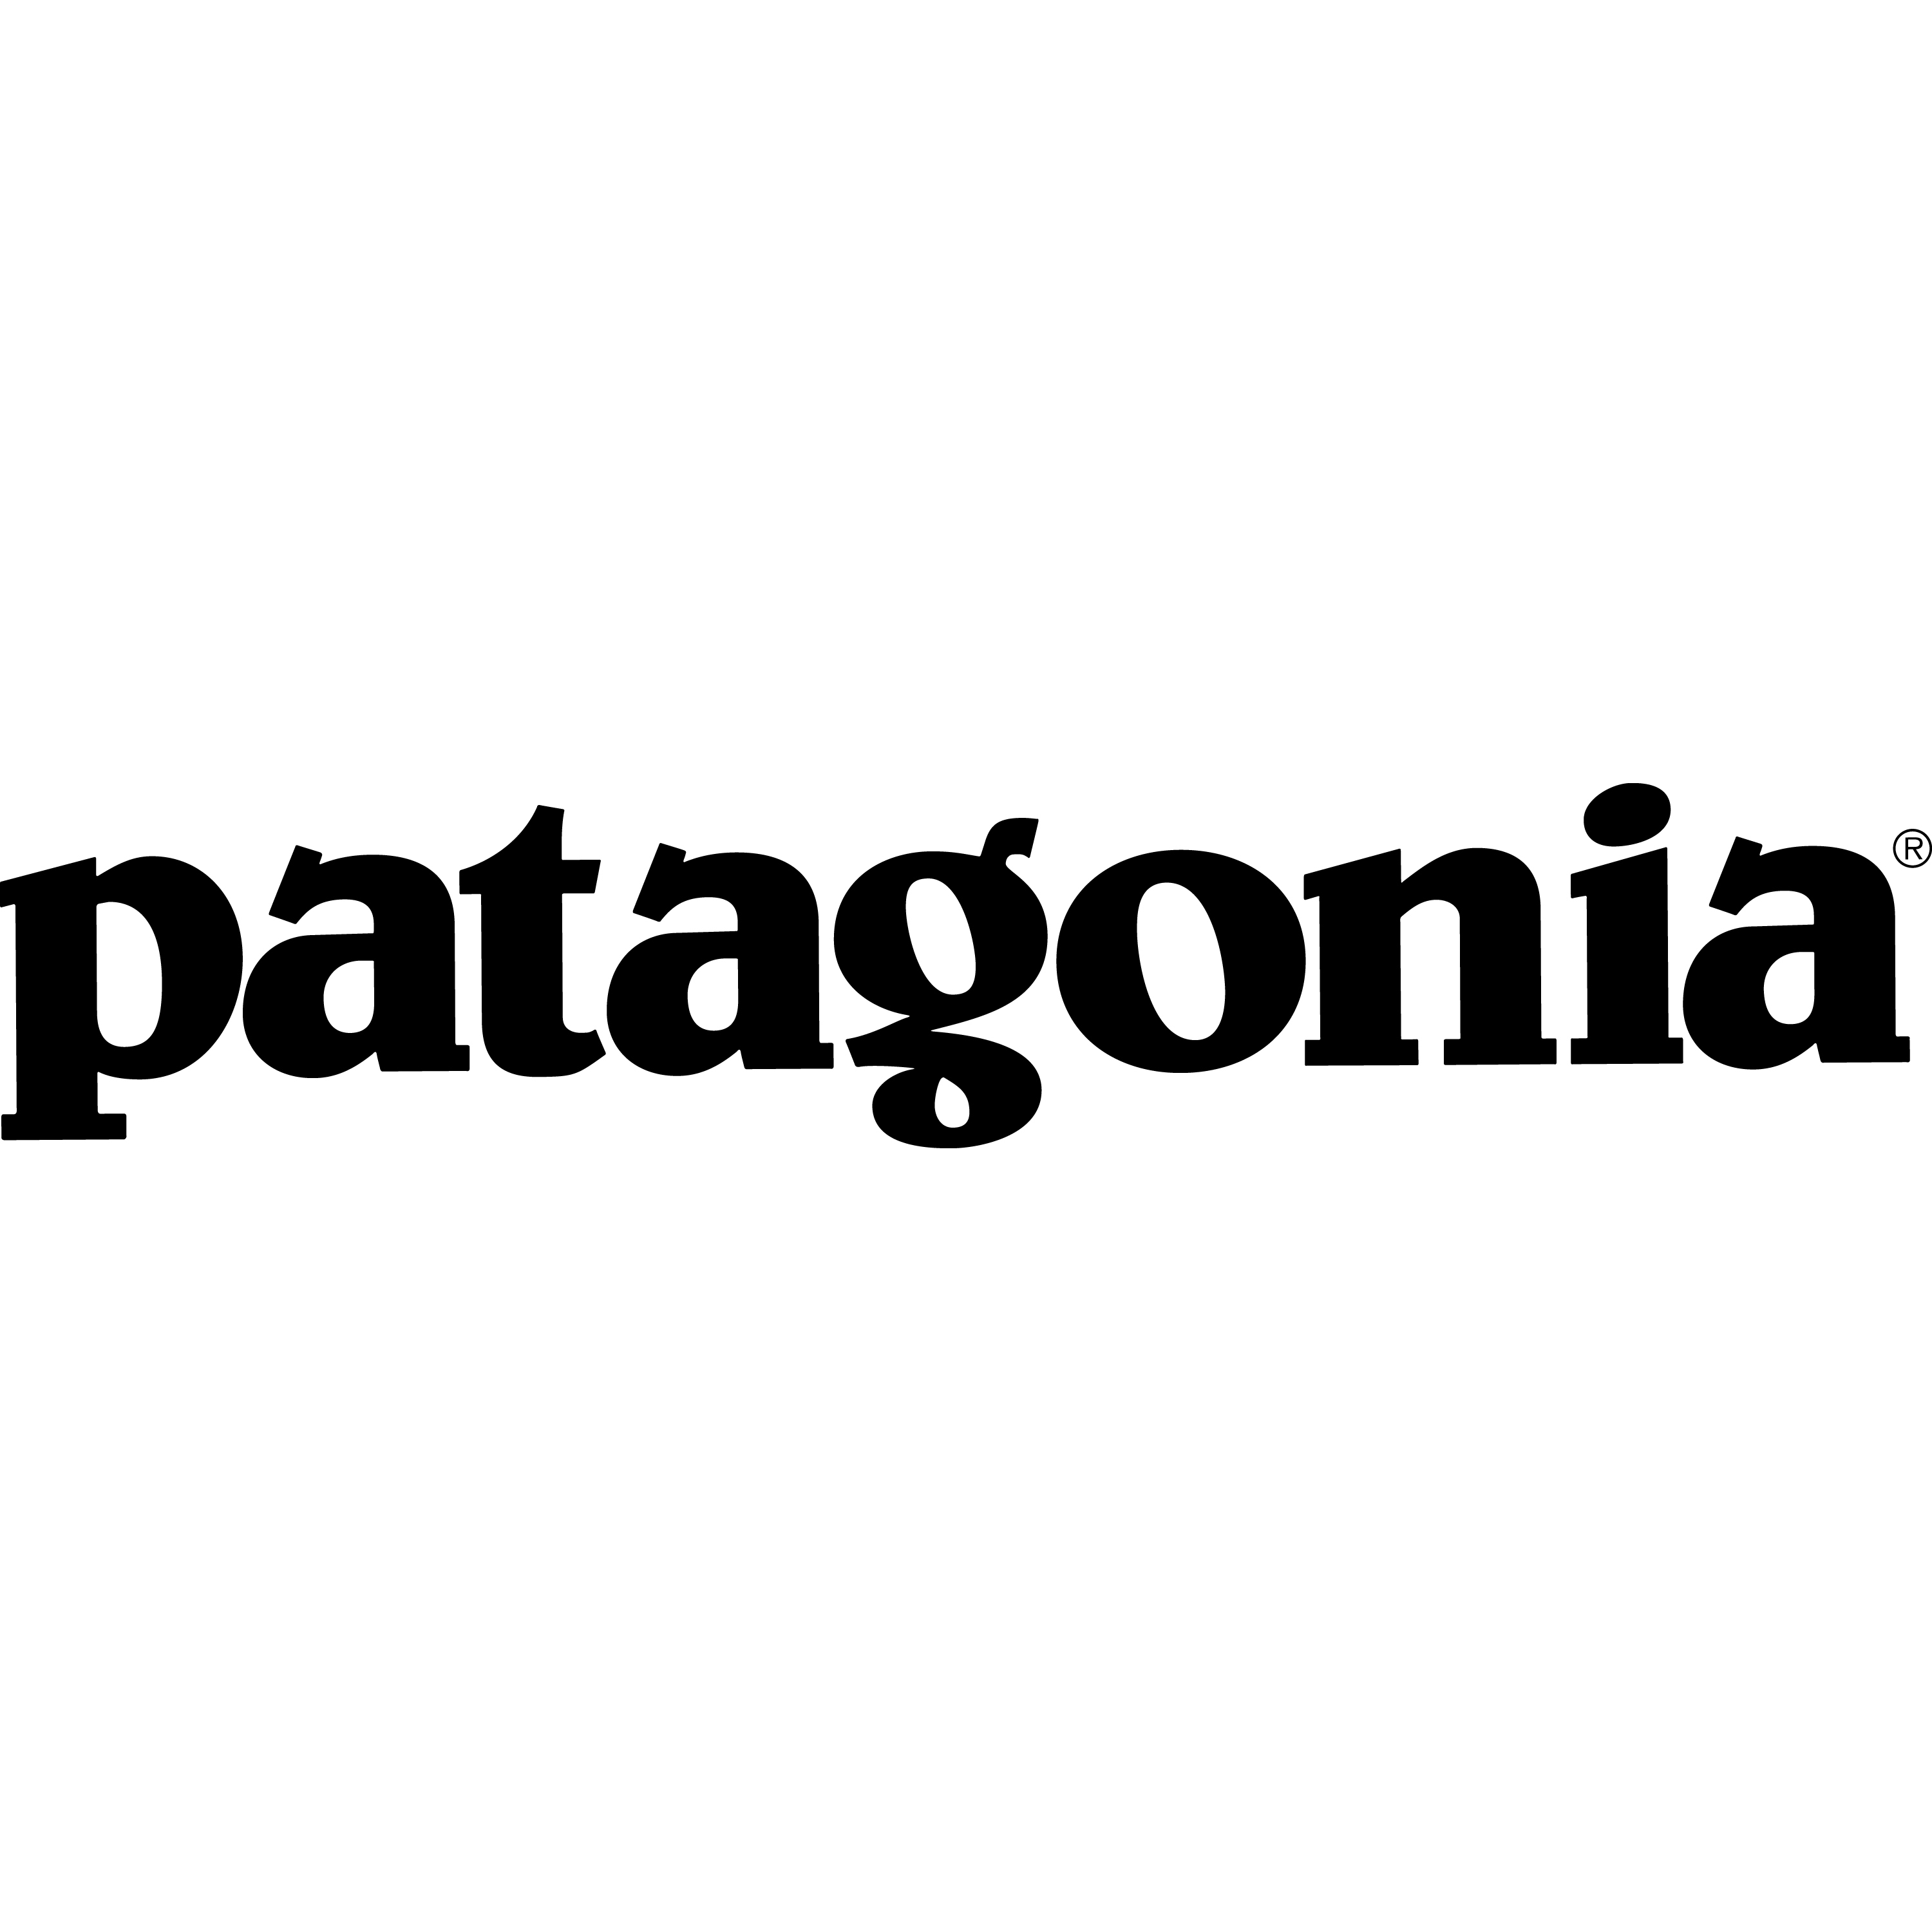 Patagonia-word-high-res